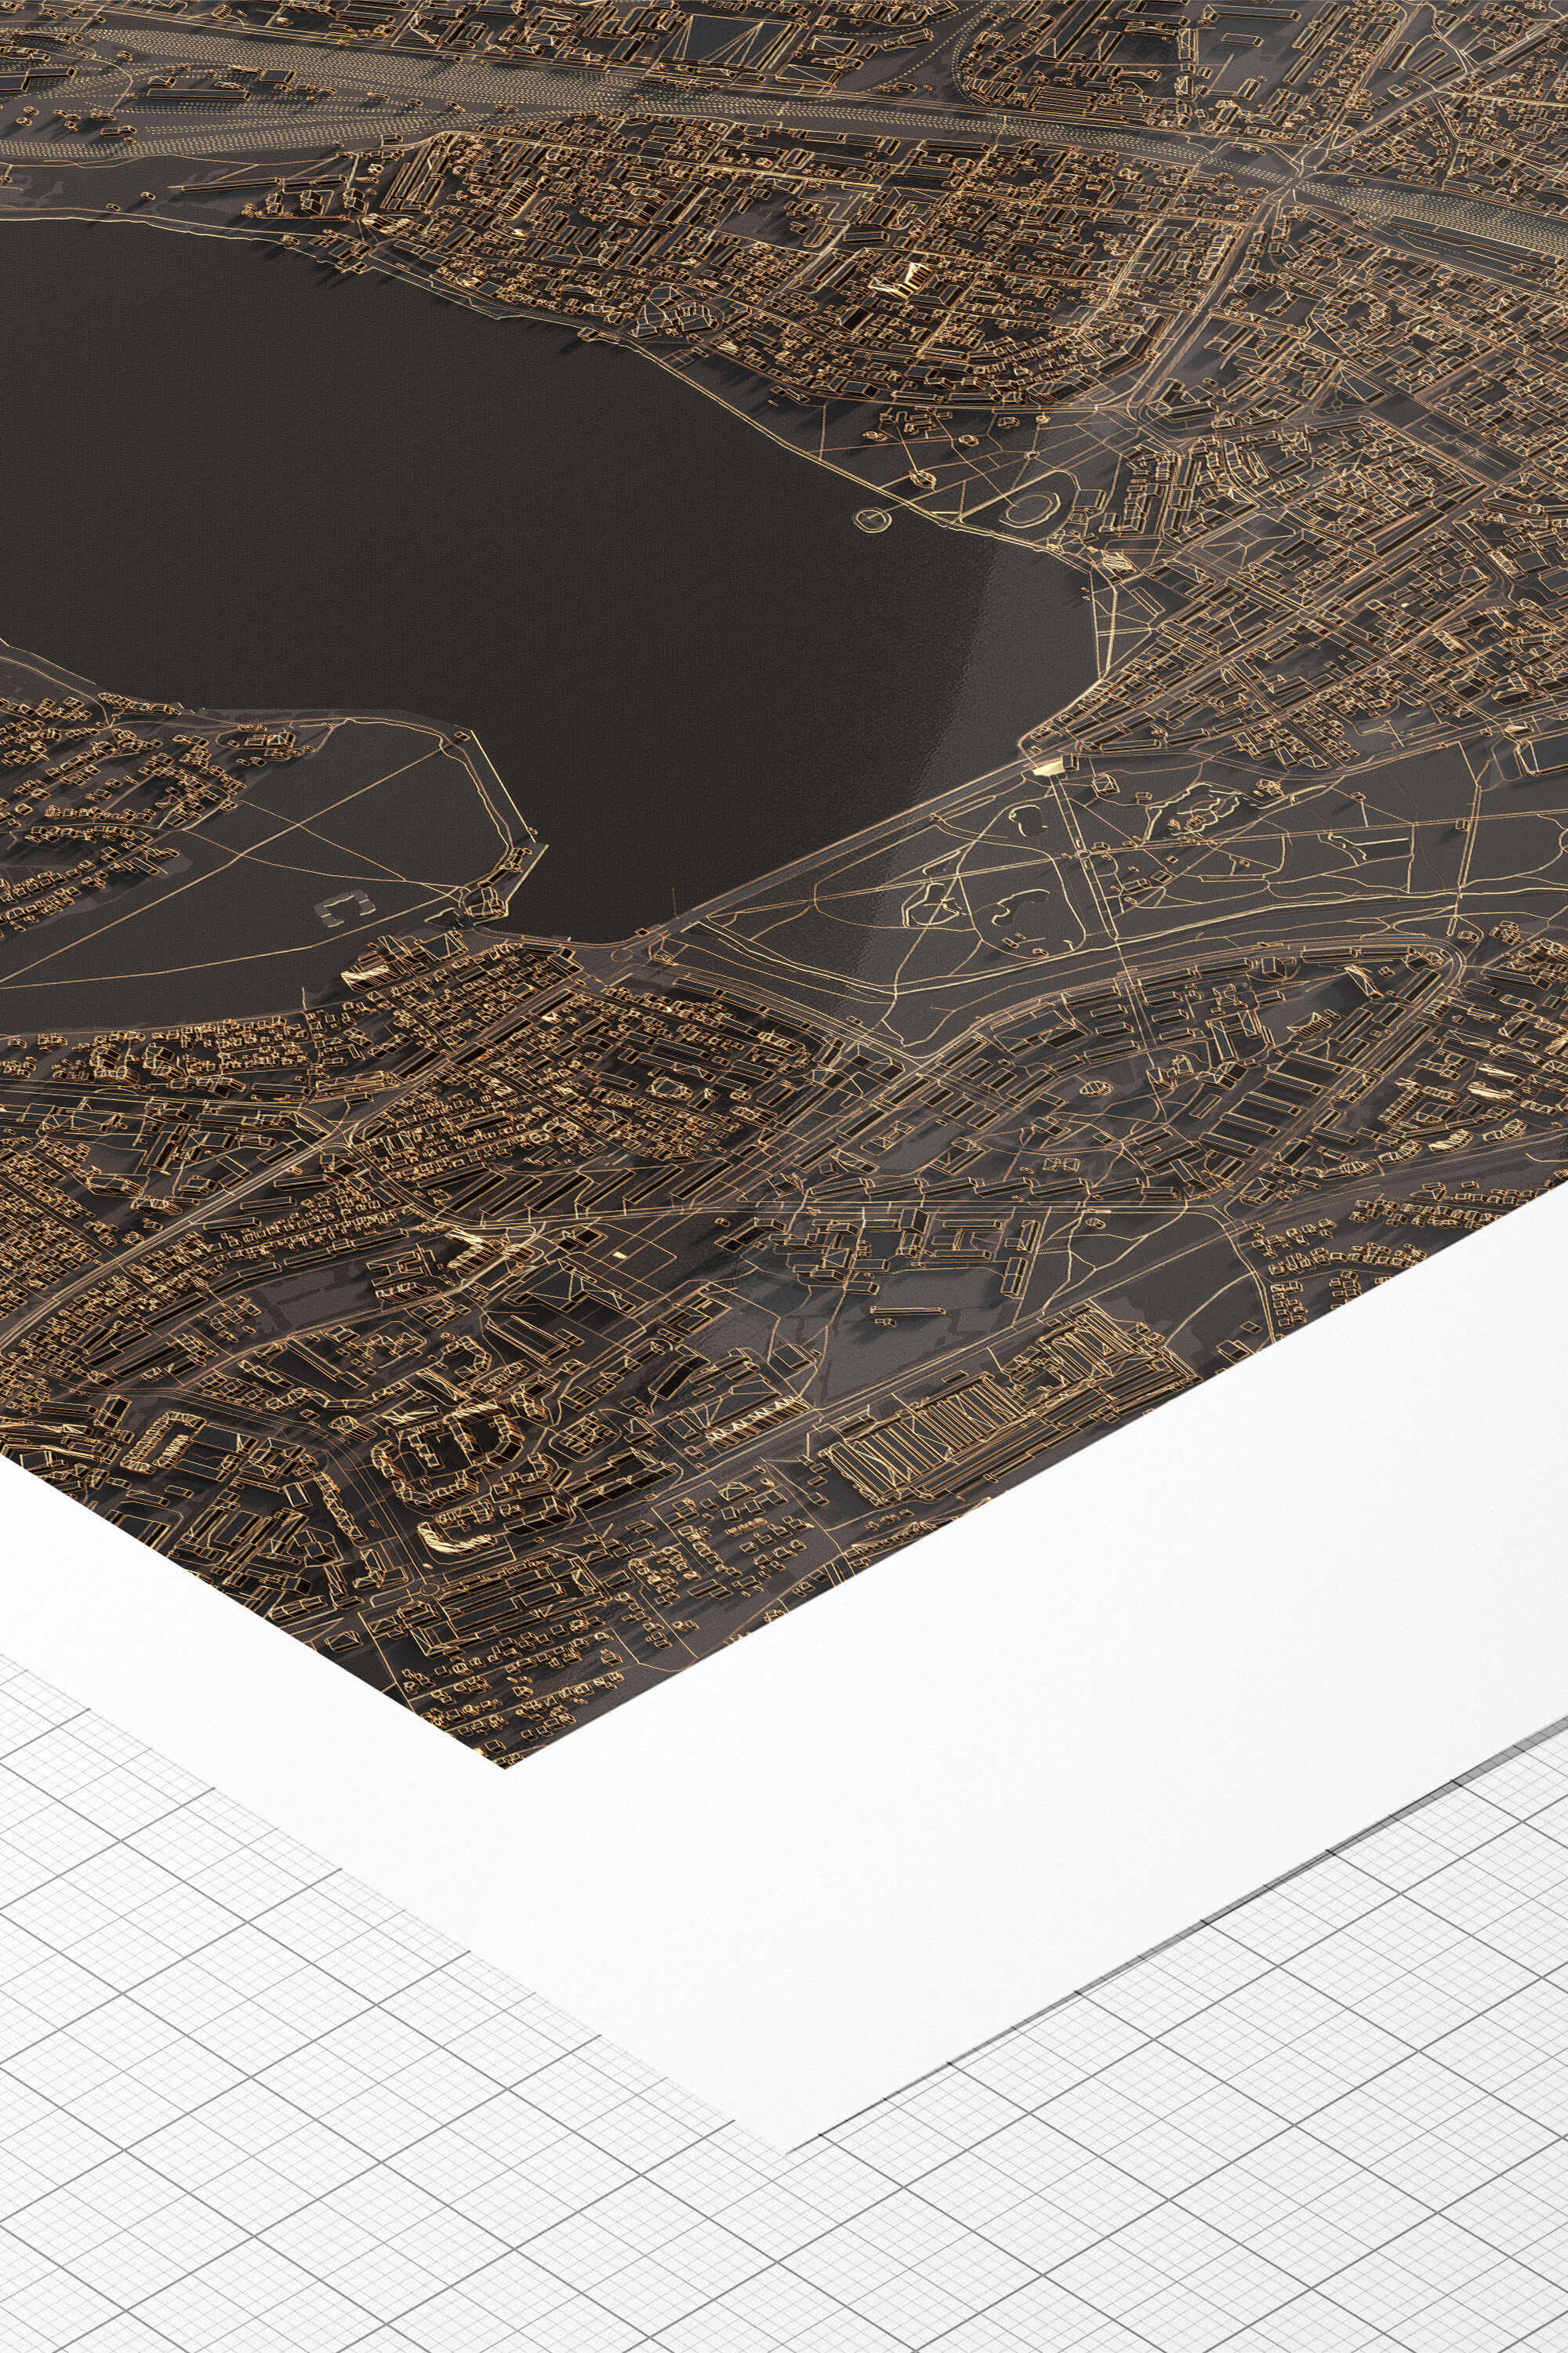 Приклад файного друку на папері hahnemuhle чорної мапи Тернополя